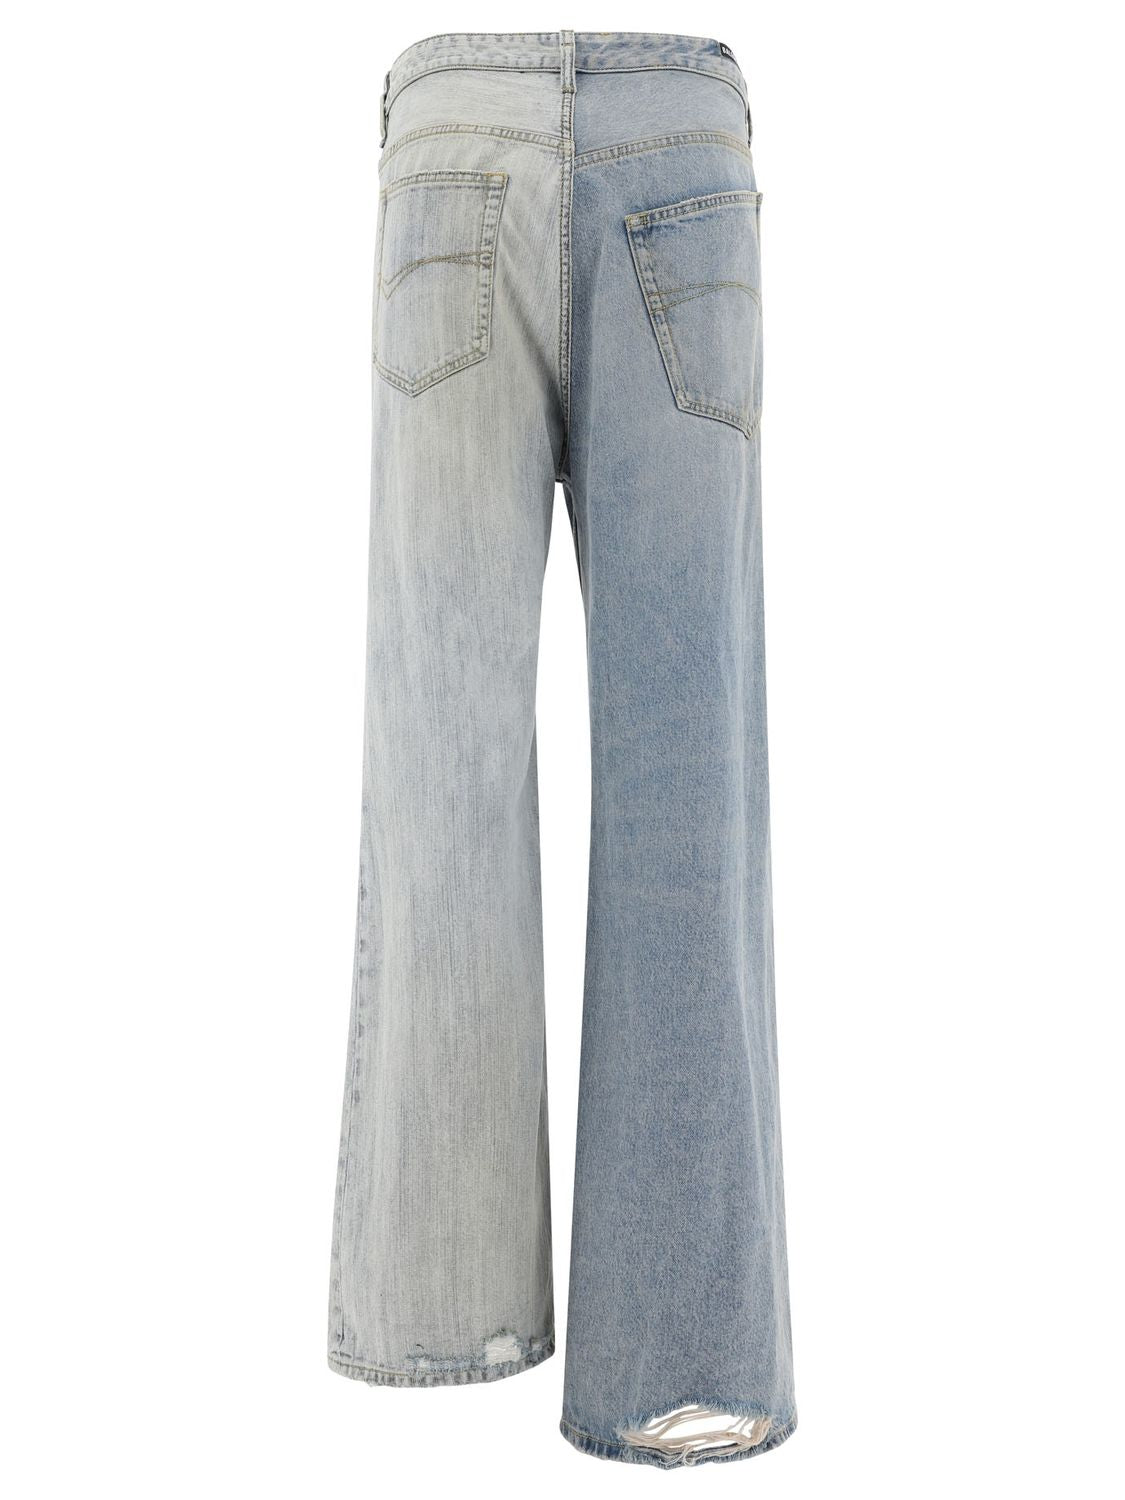 BALENCIAGA "FIFTY-FIFTY" Jeans